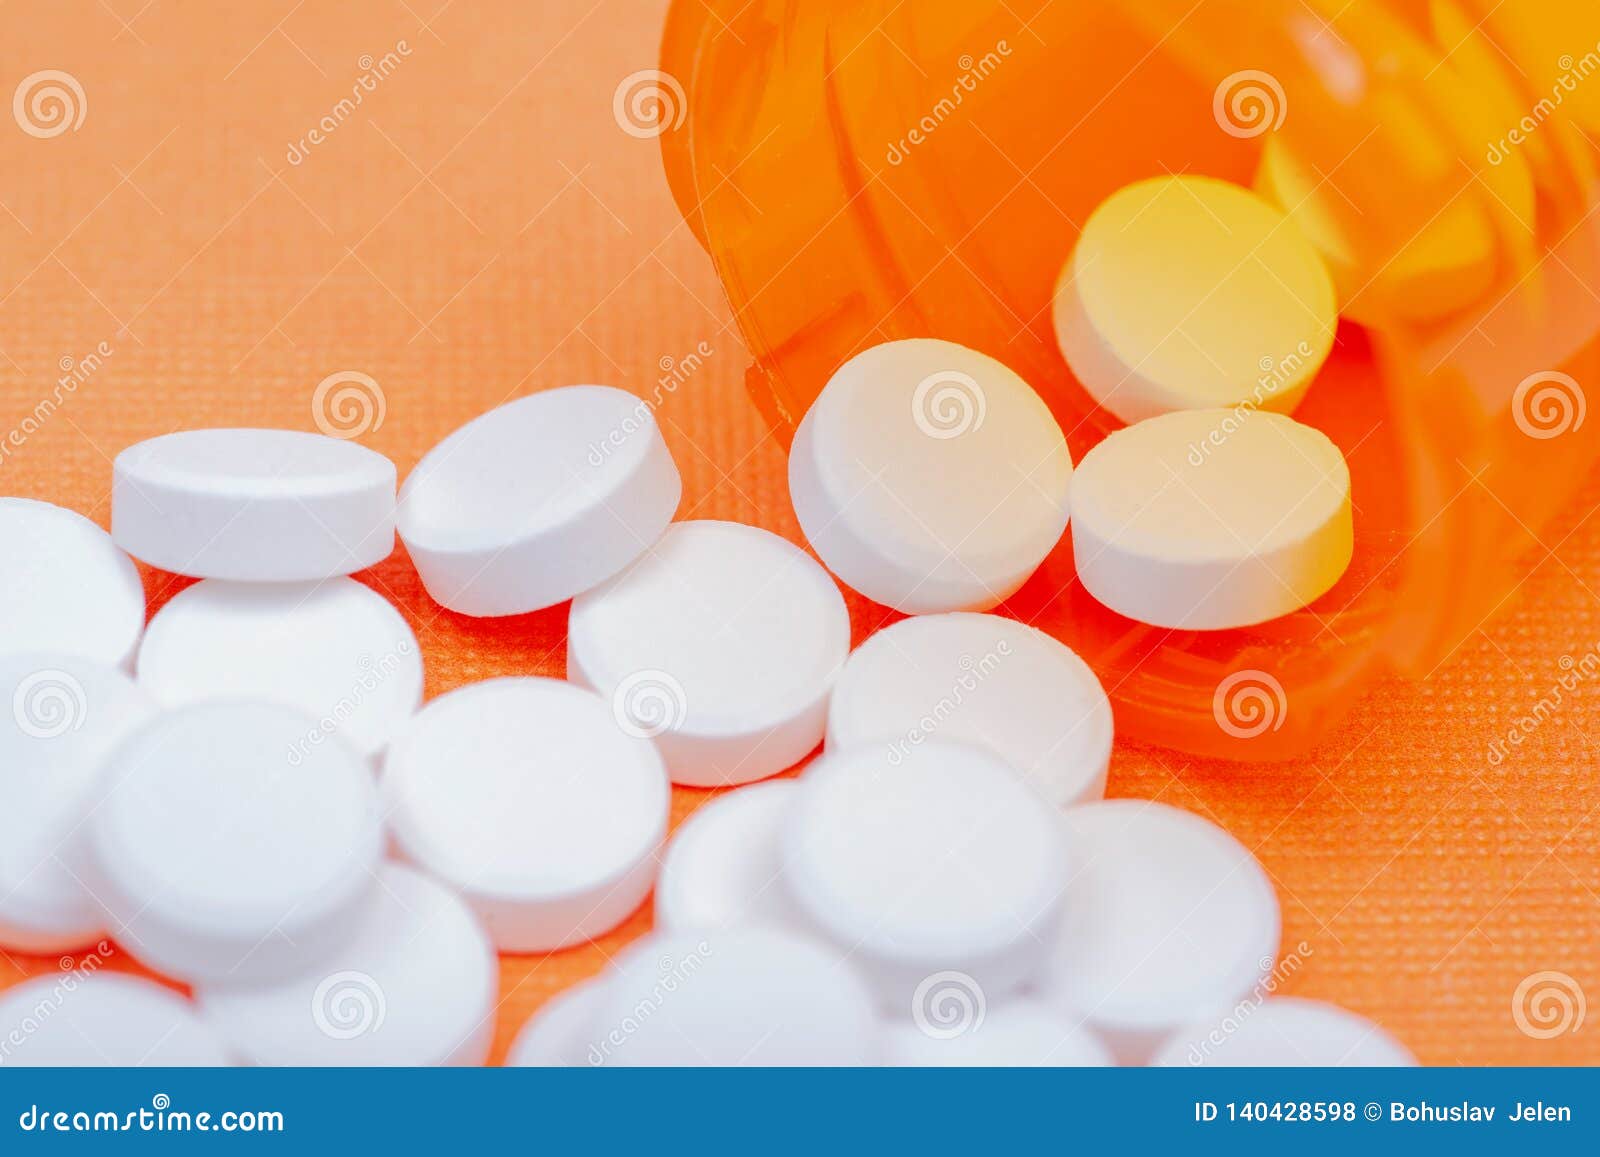 non-steroidal anti-inflammatory drugs. acetaminophen white tablets on orange